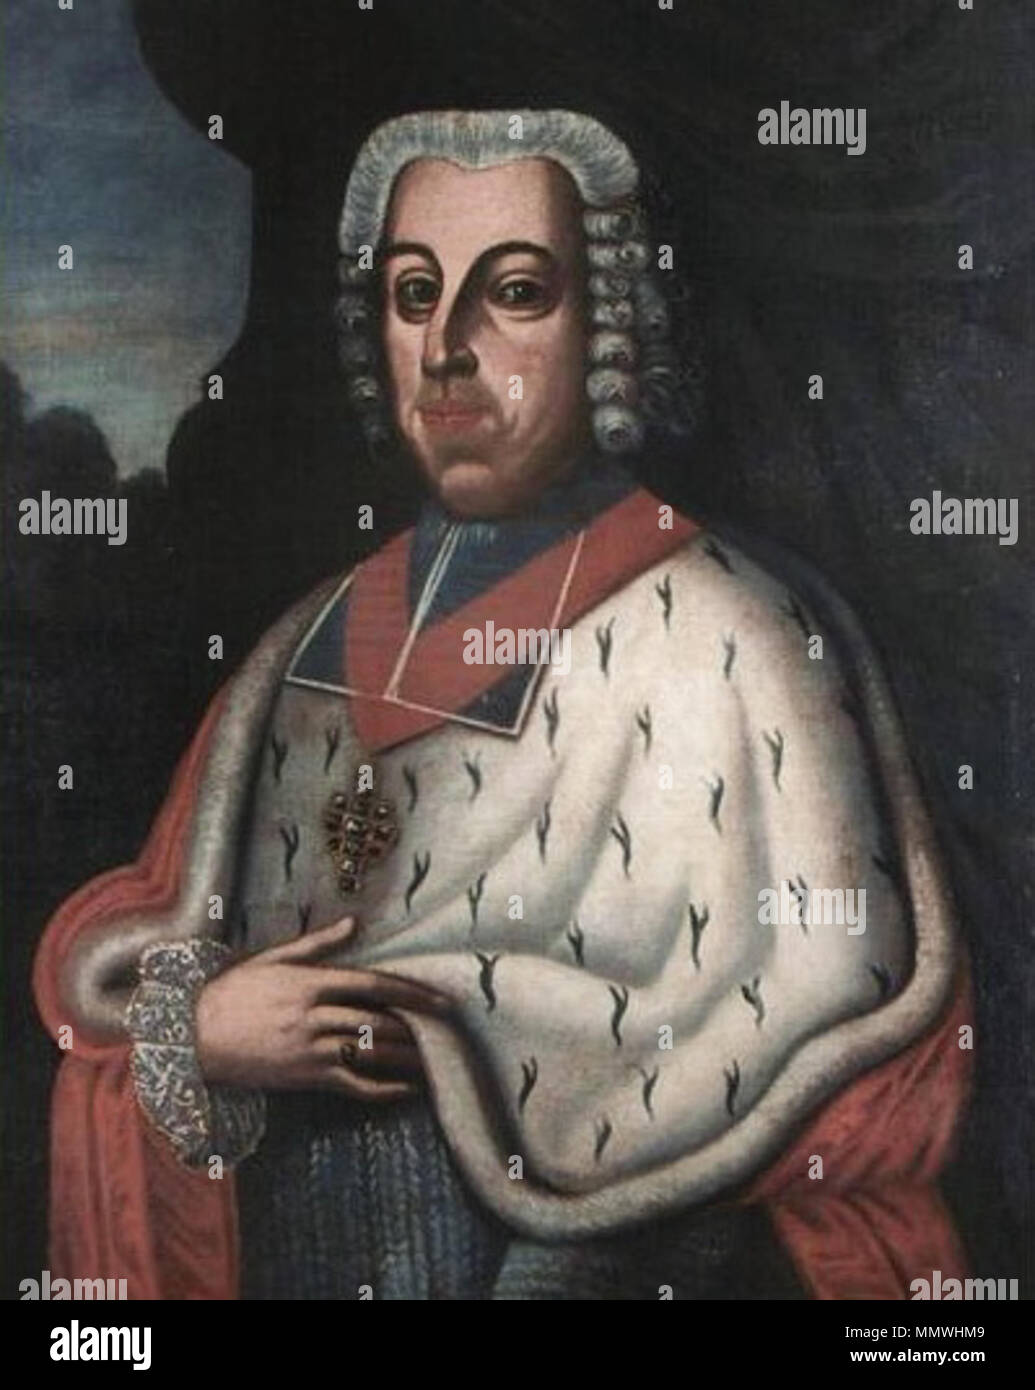 Clemens August da Baviera (1700-1761), Arcebispo-Eleitor de